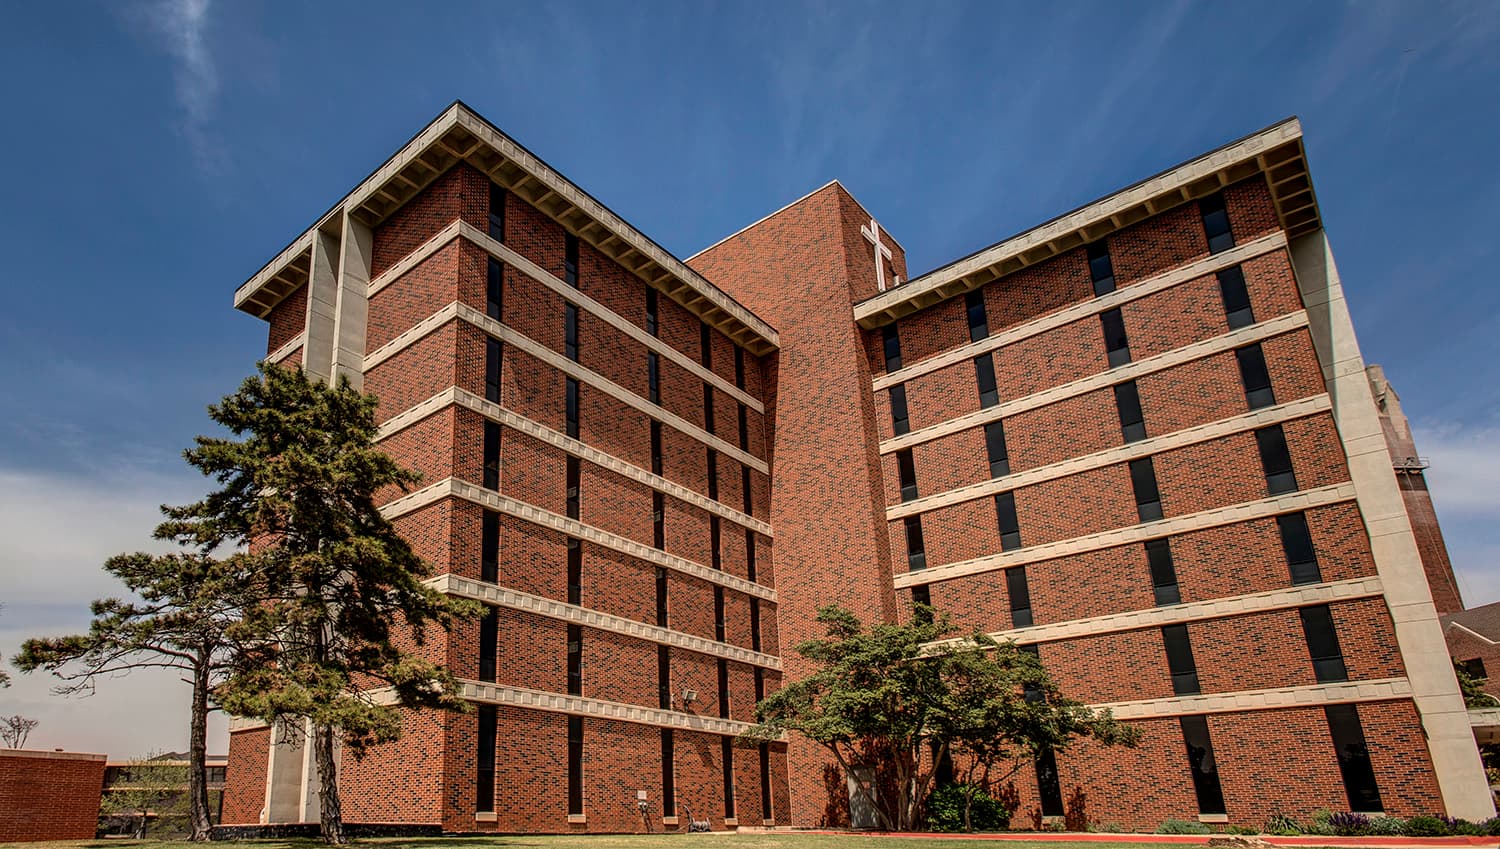 Walker Hall, a seven-story brick freshman dormitory on OCU's Campus